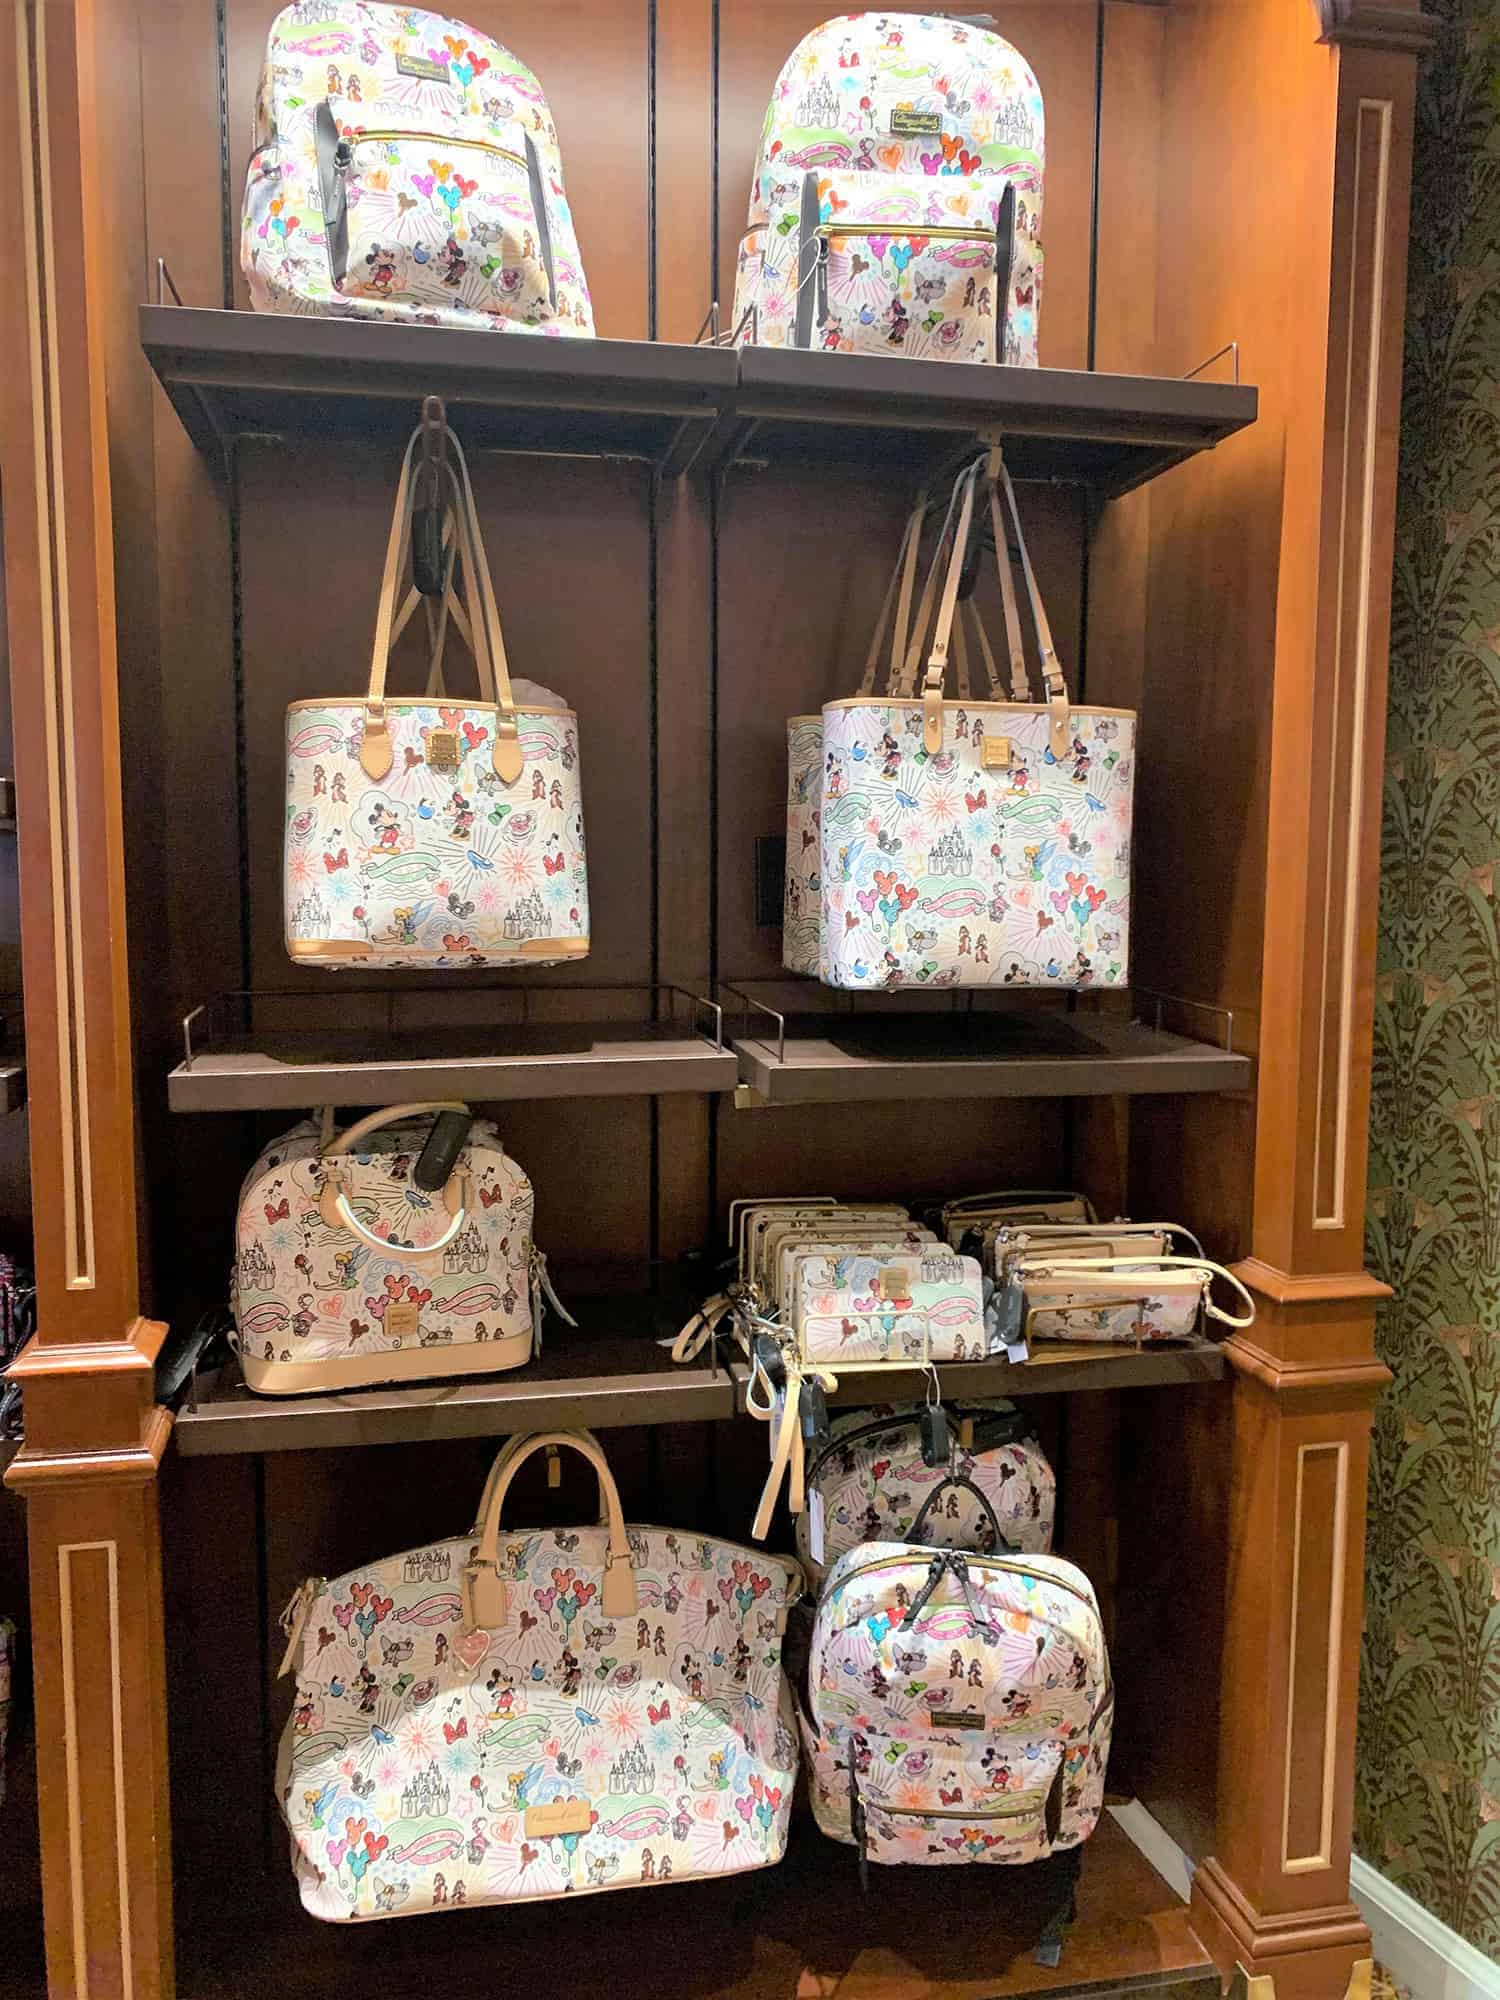 Latest Disney Dooney & Bourke Bags at Disney World Feb 2019